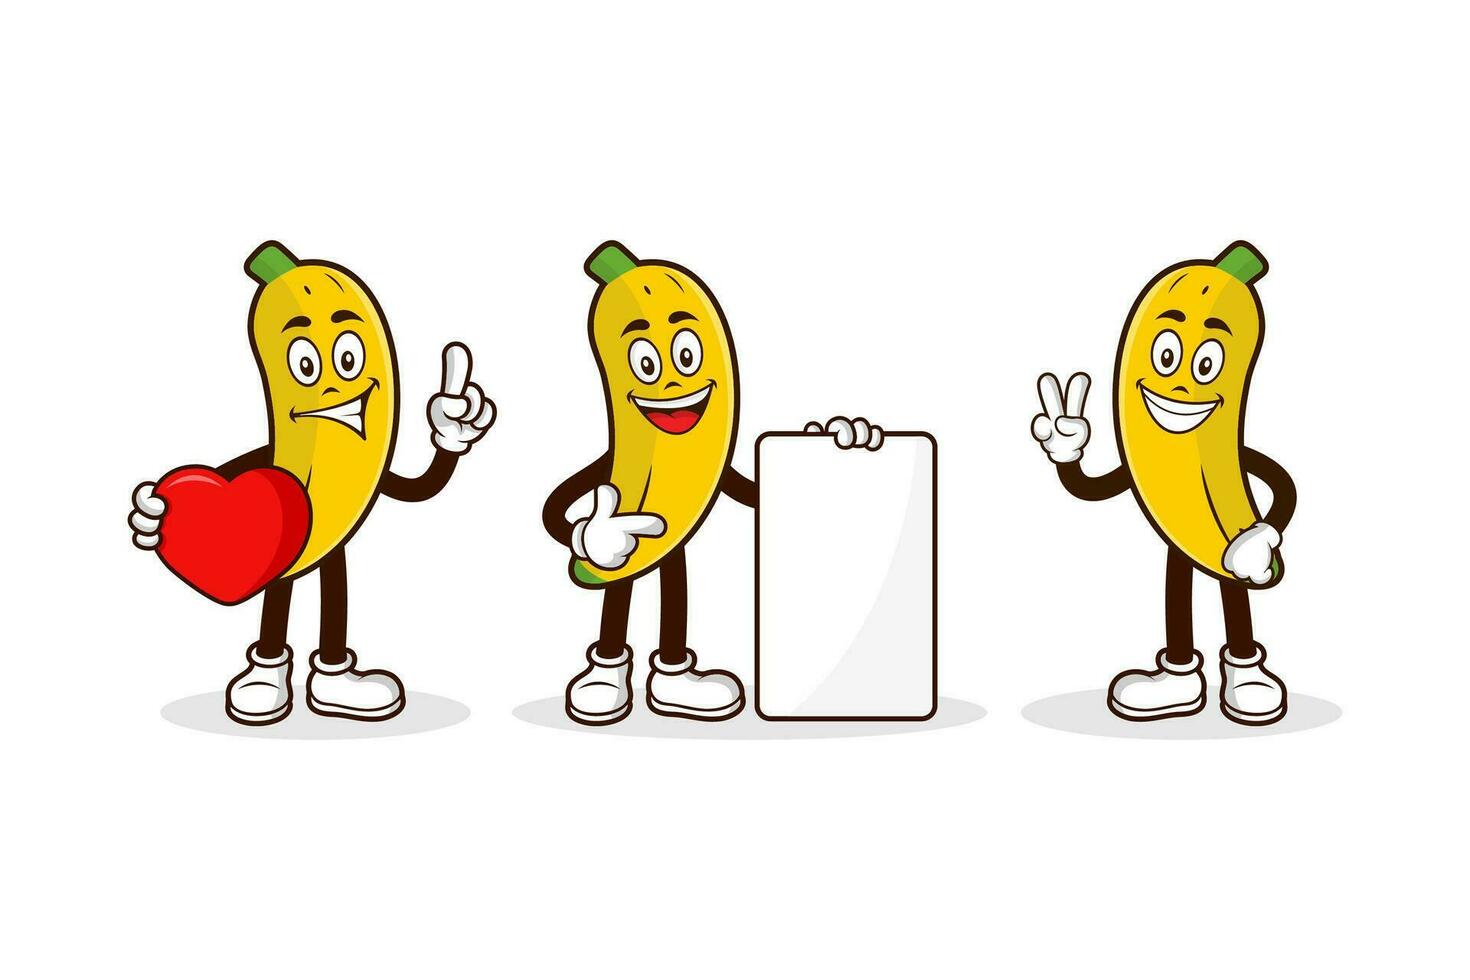 Banana fruit cartoon character design collection vector